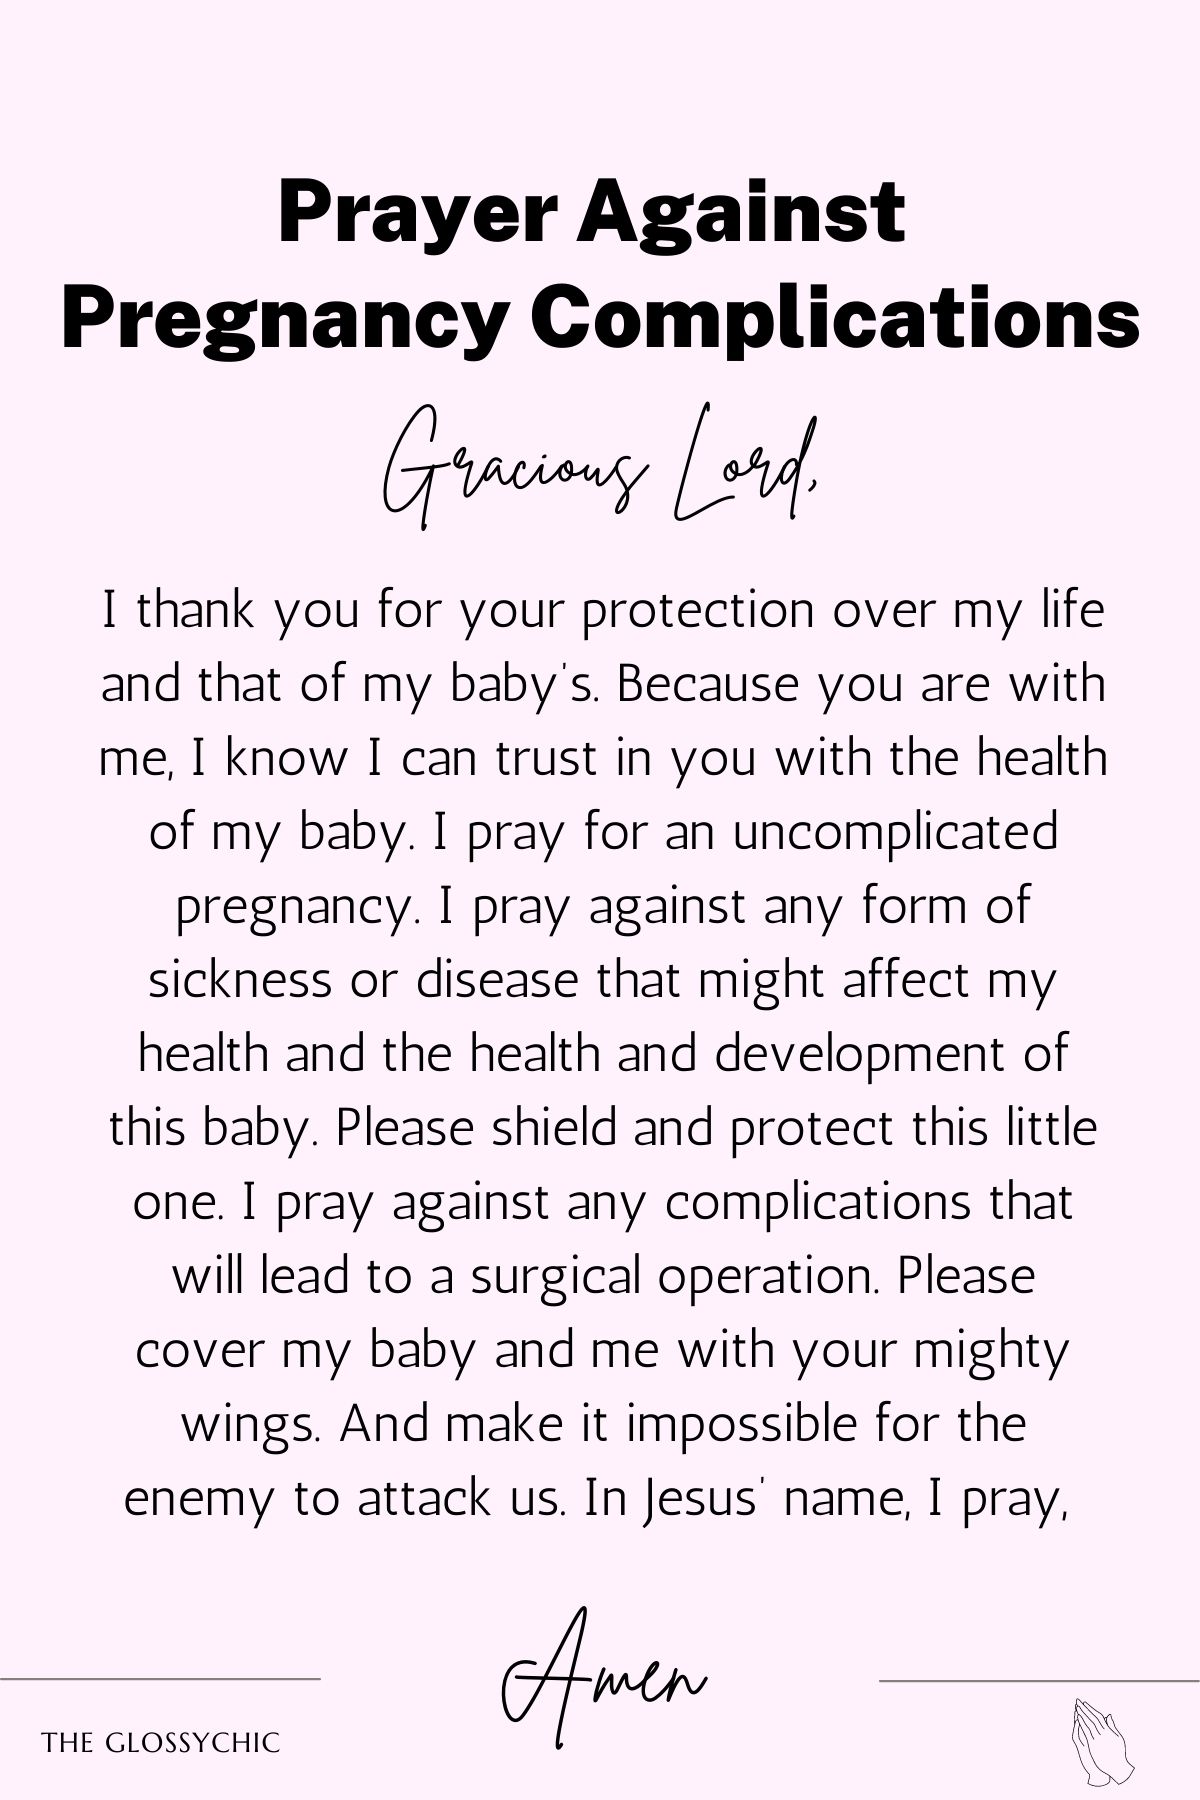 Prayer against pregnancy complications - prayer points for pregnant women